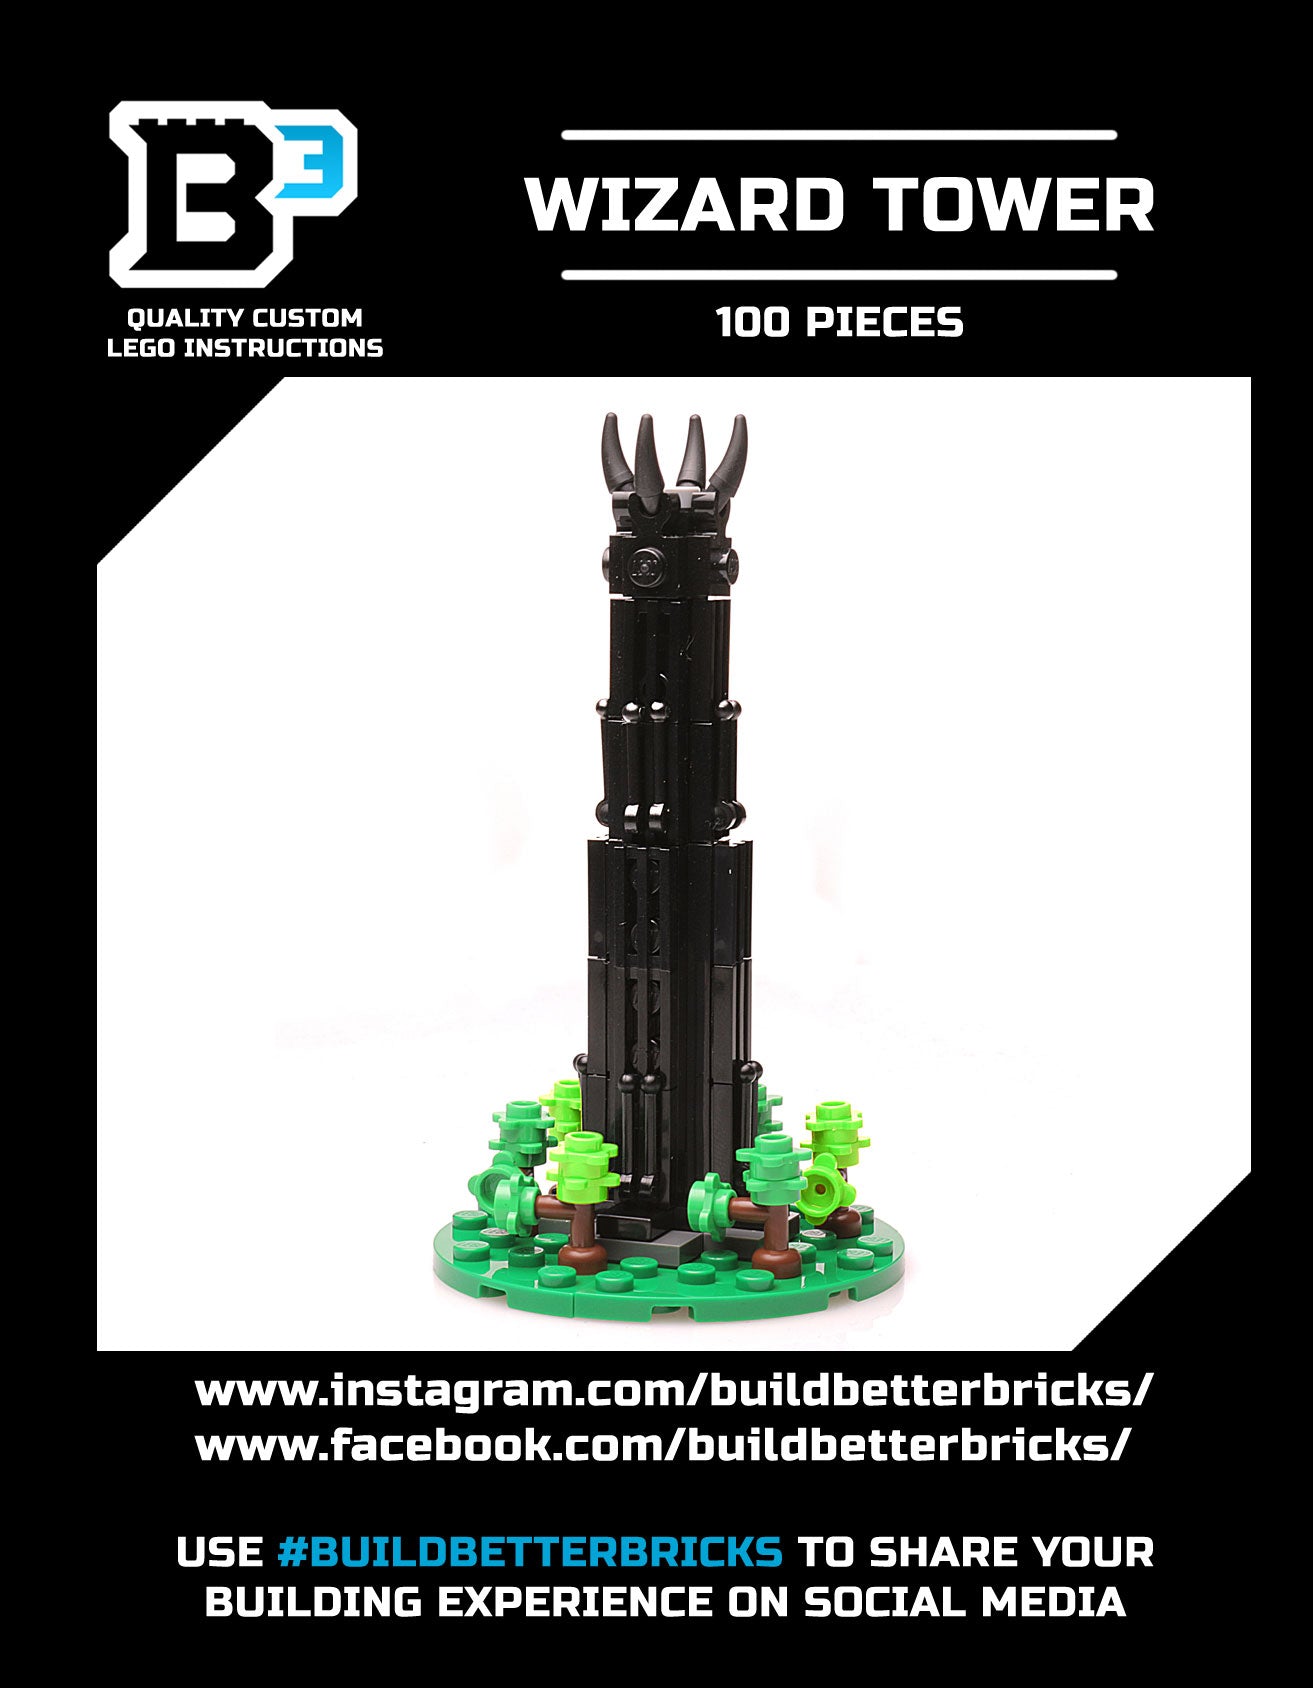 B3 Customs® Dark Tower Building Set